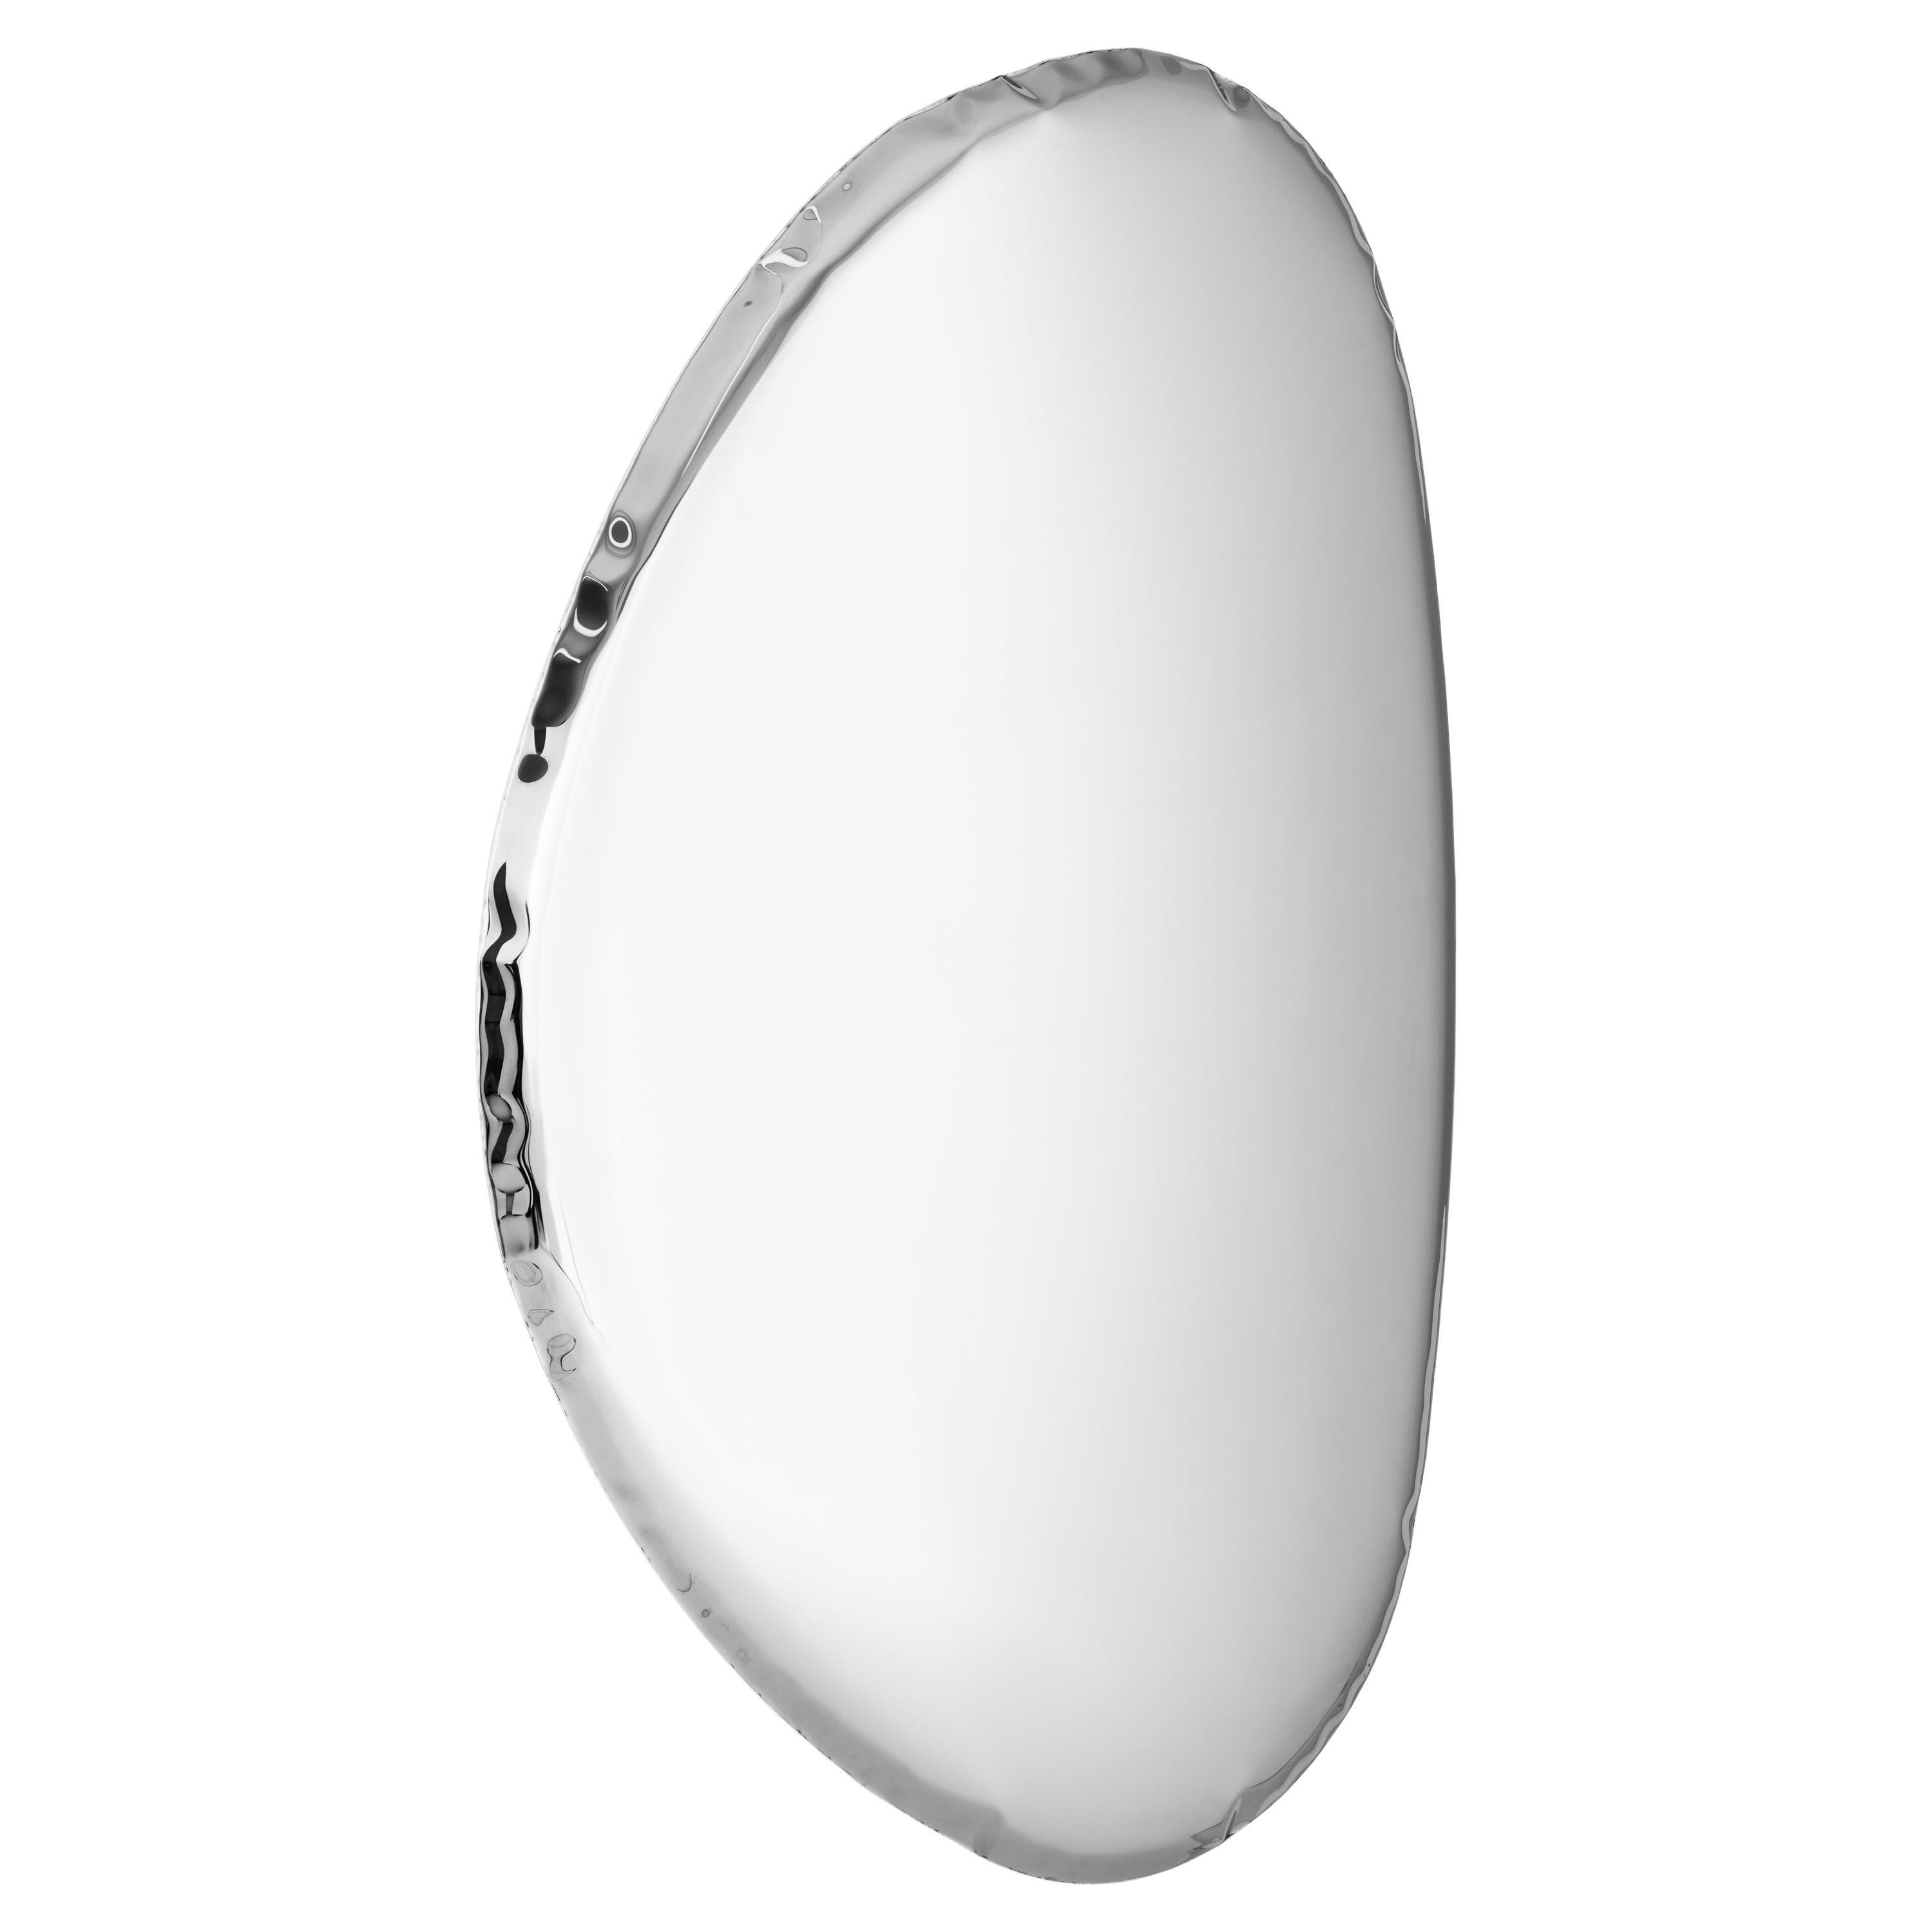 Stainless Steel Tafla O2 Wall Mirror by Zieta For Sale